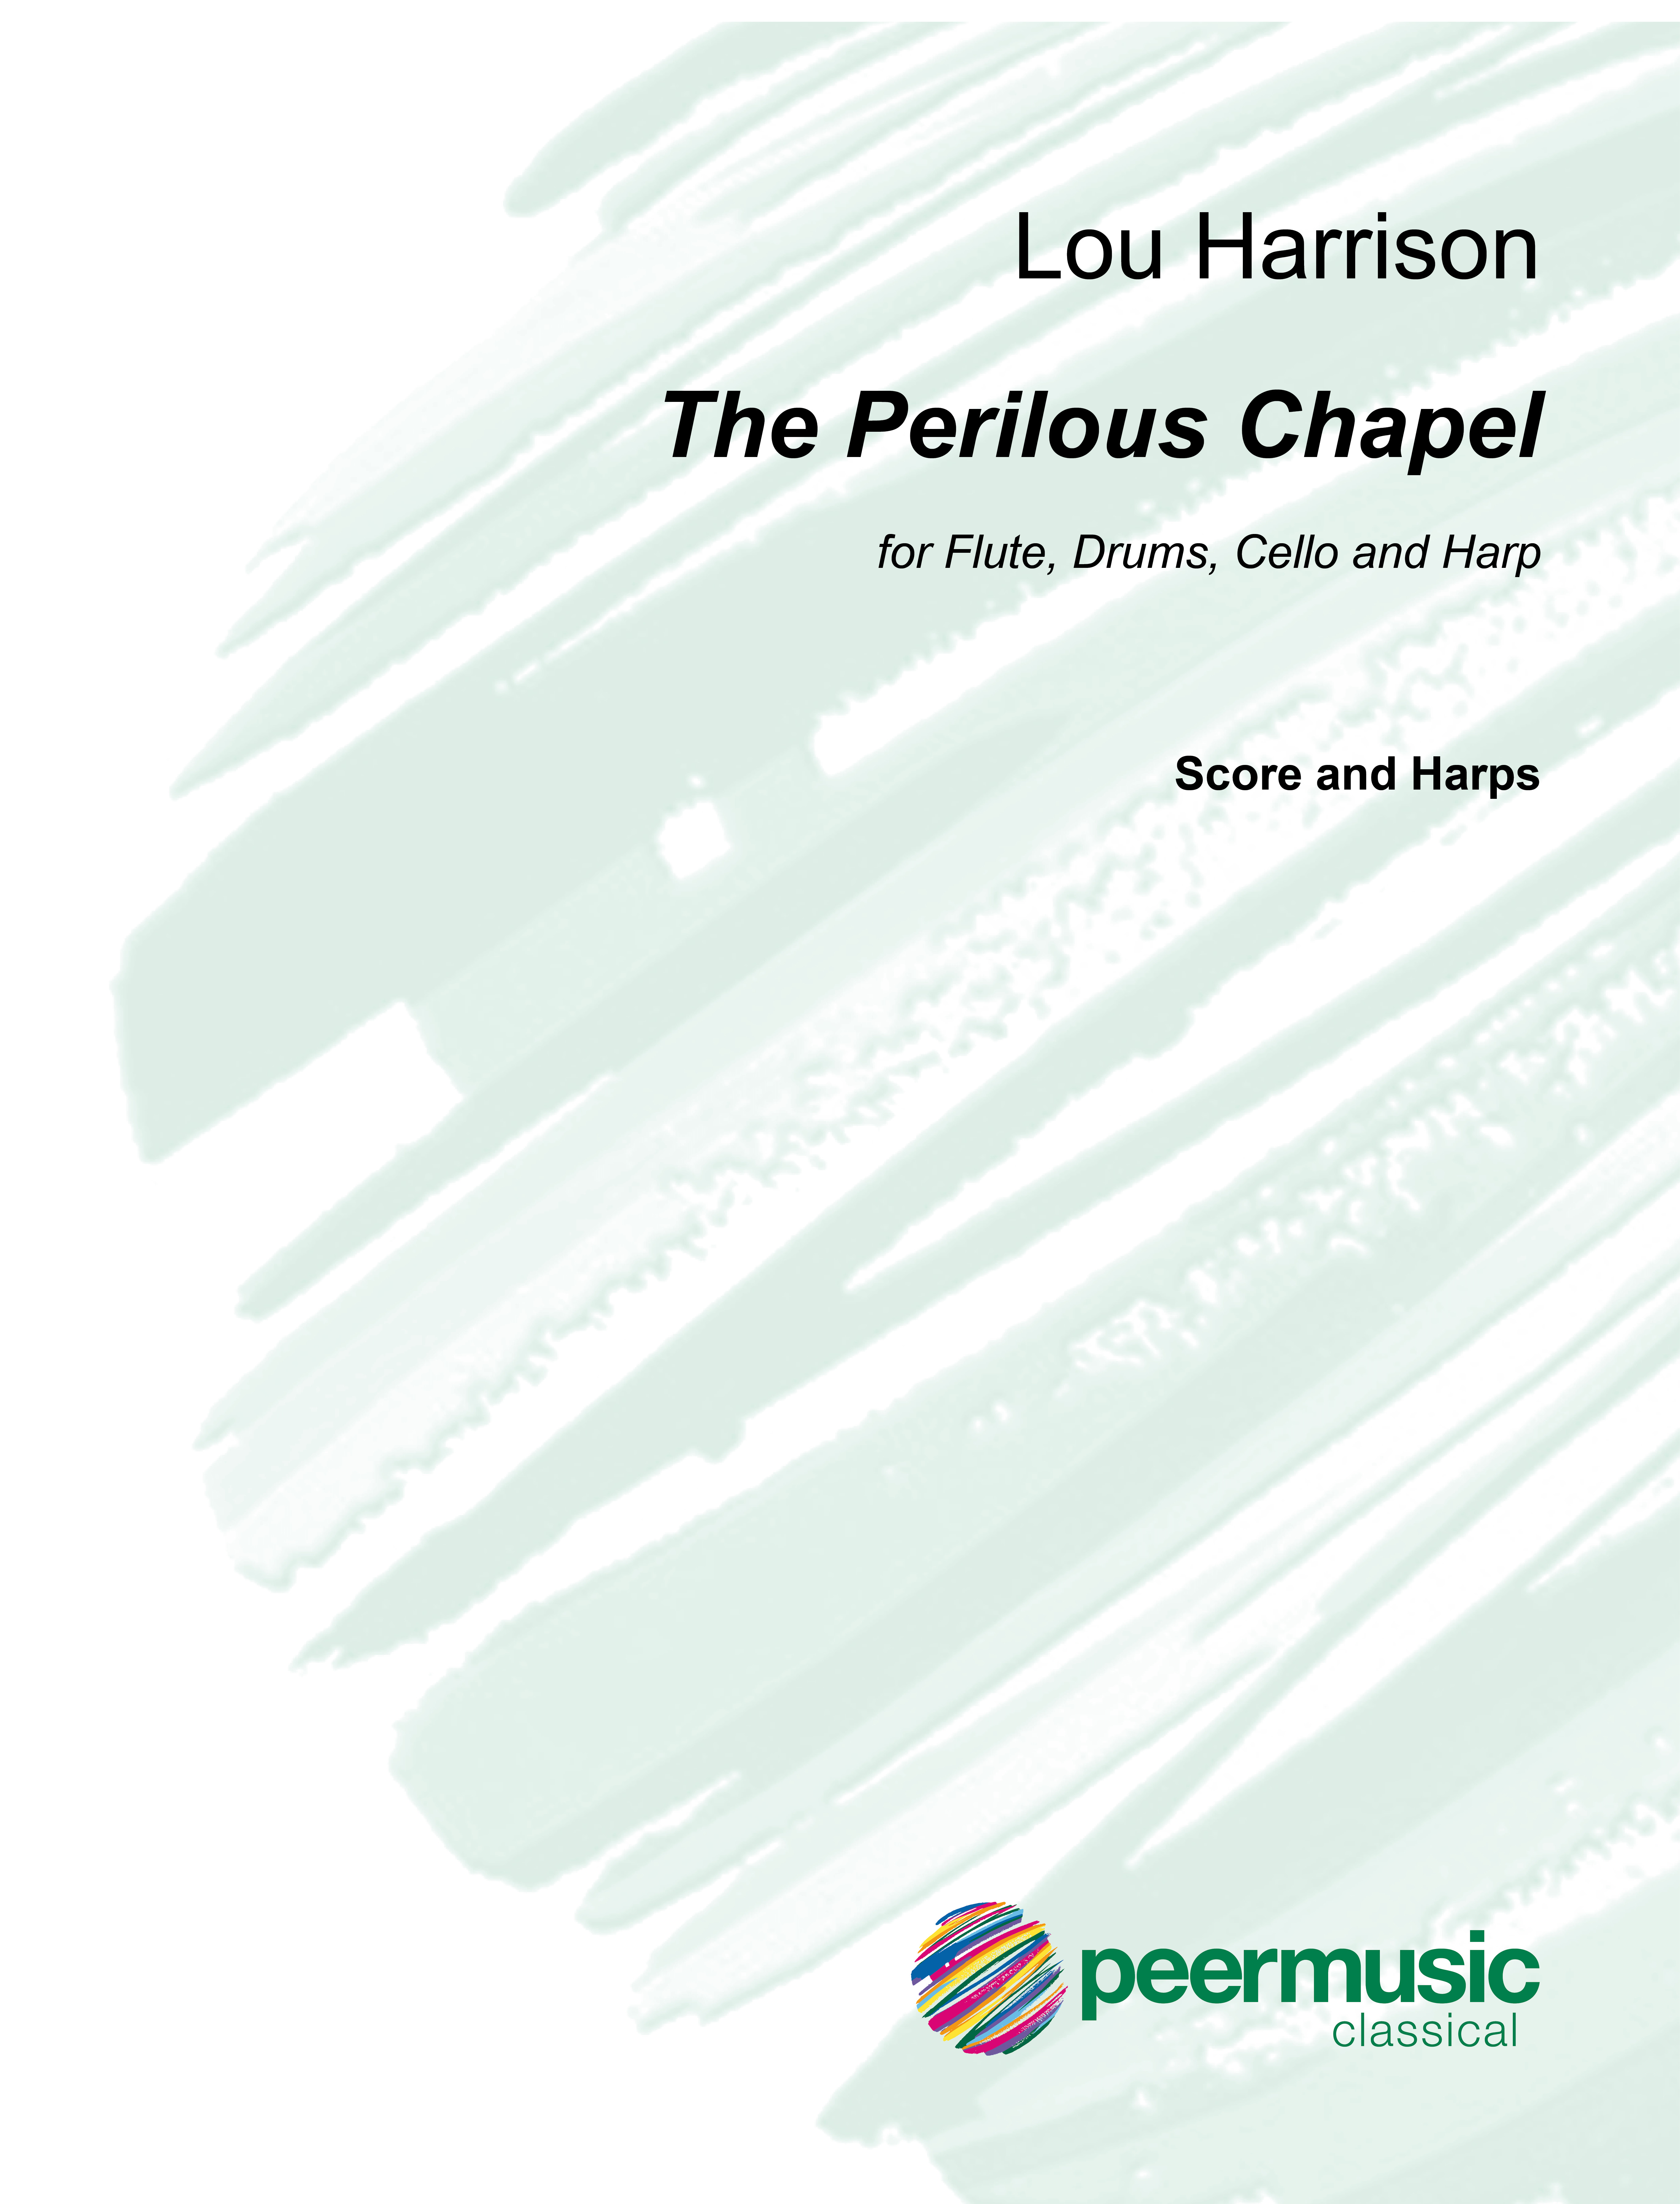 The perilous Chapel